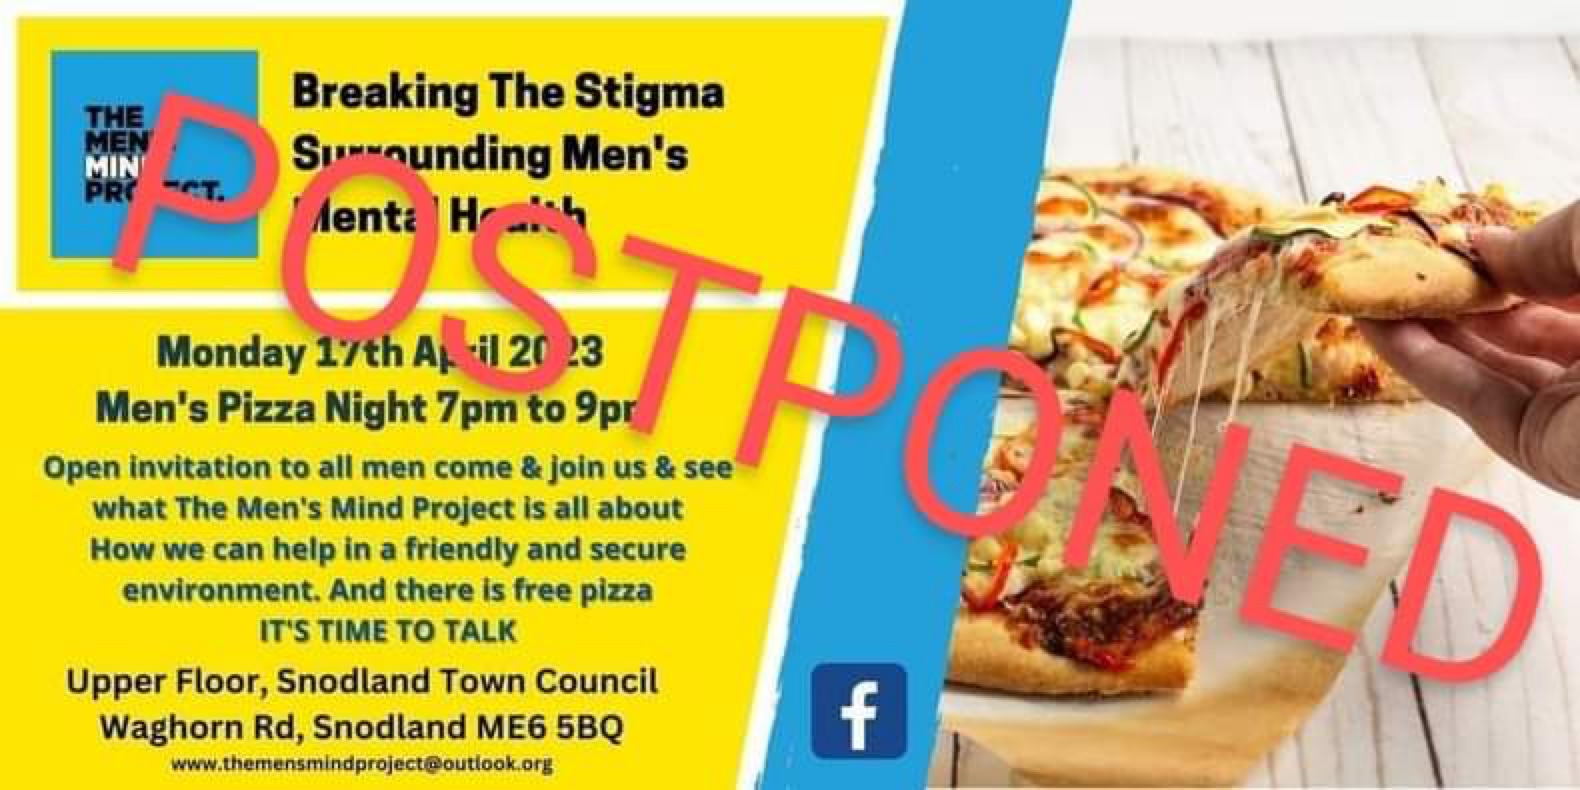 Postponed pizza night